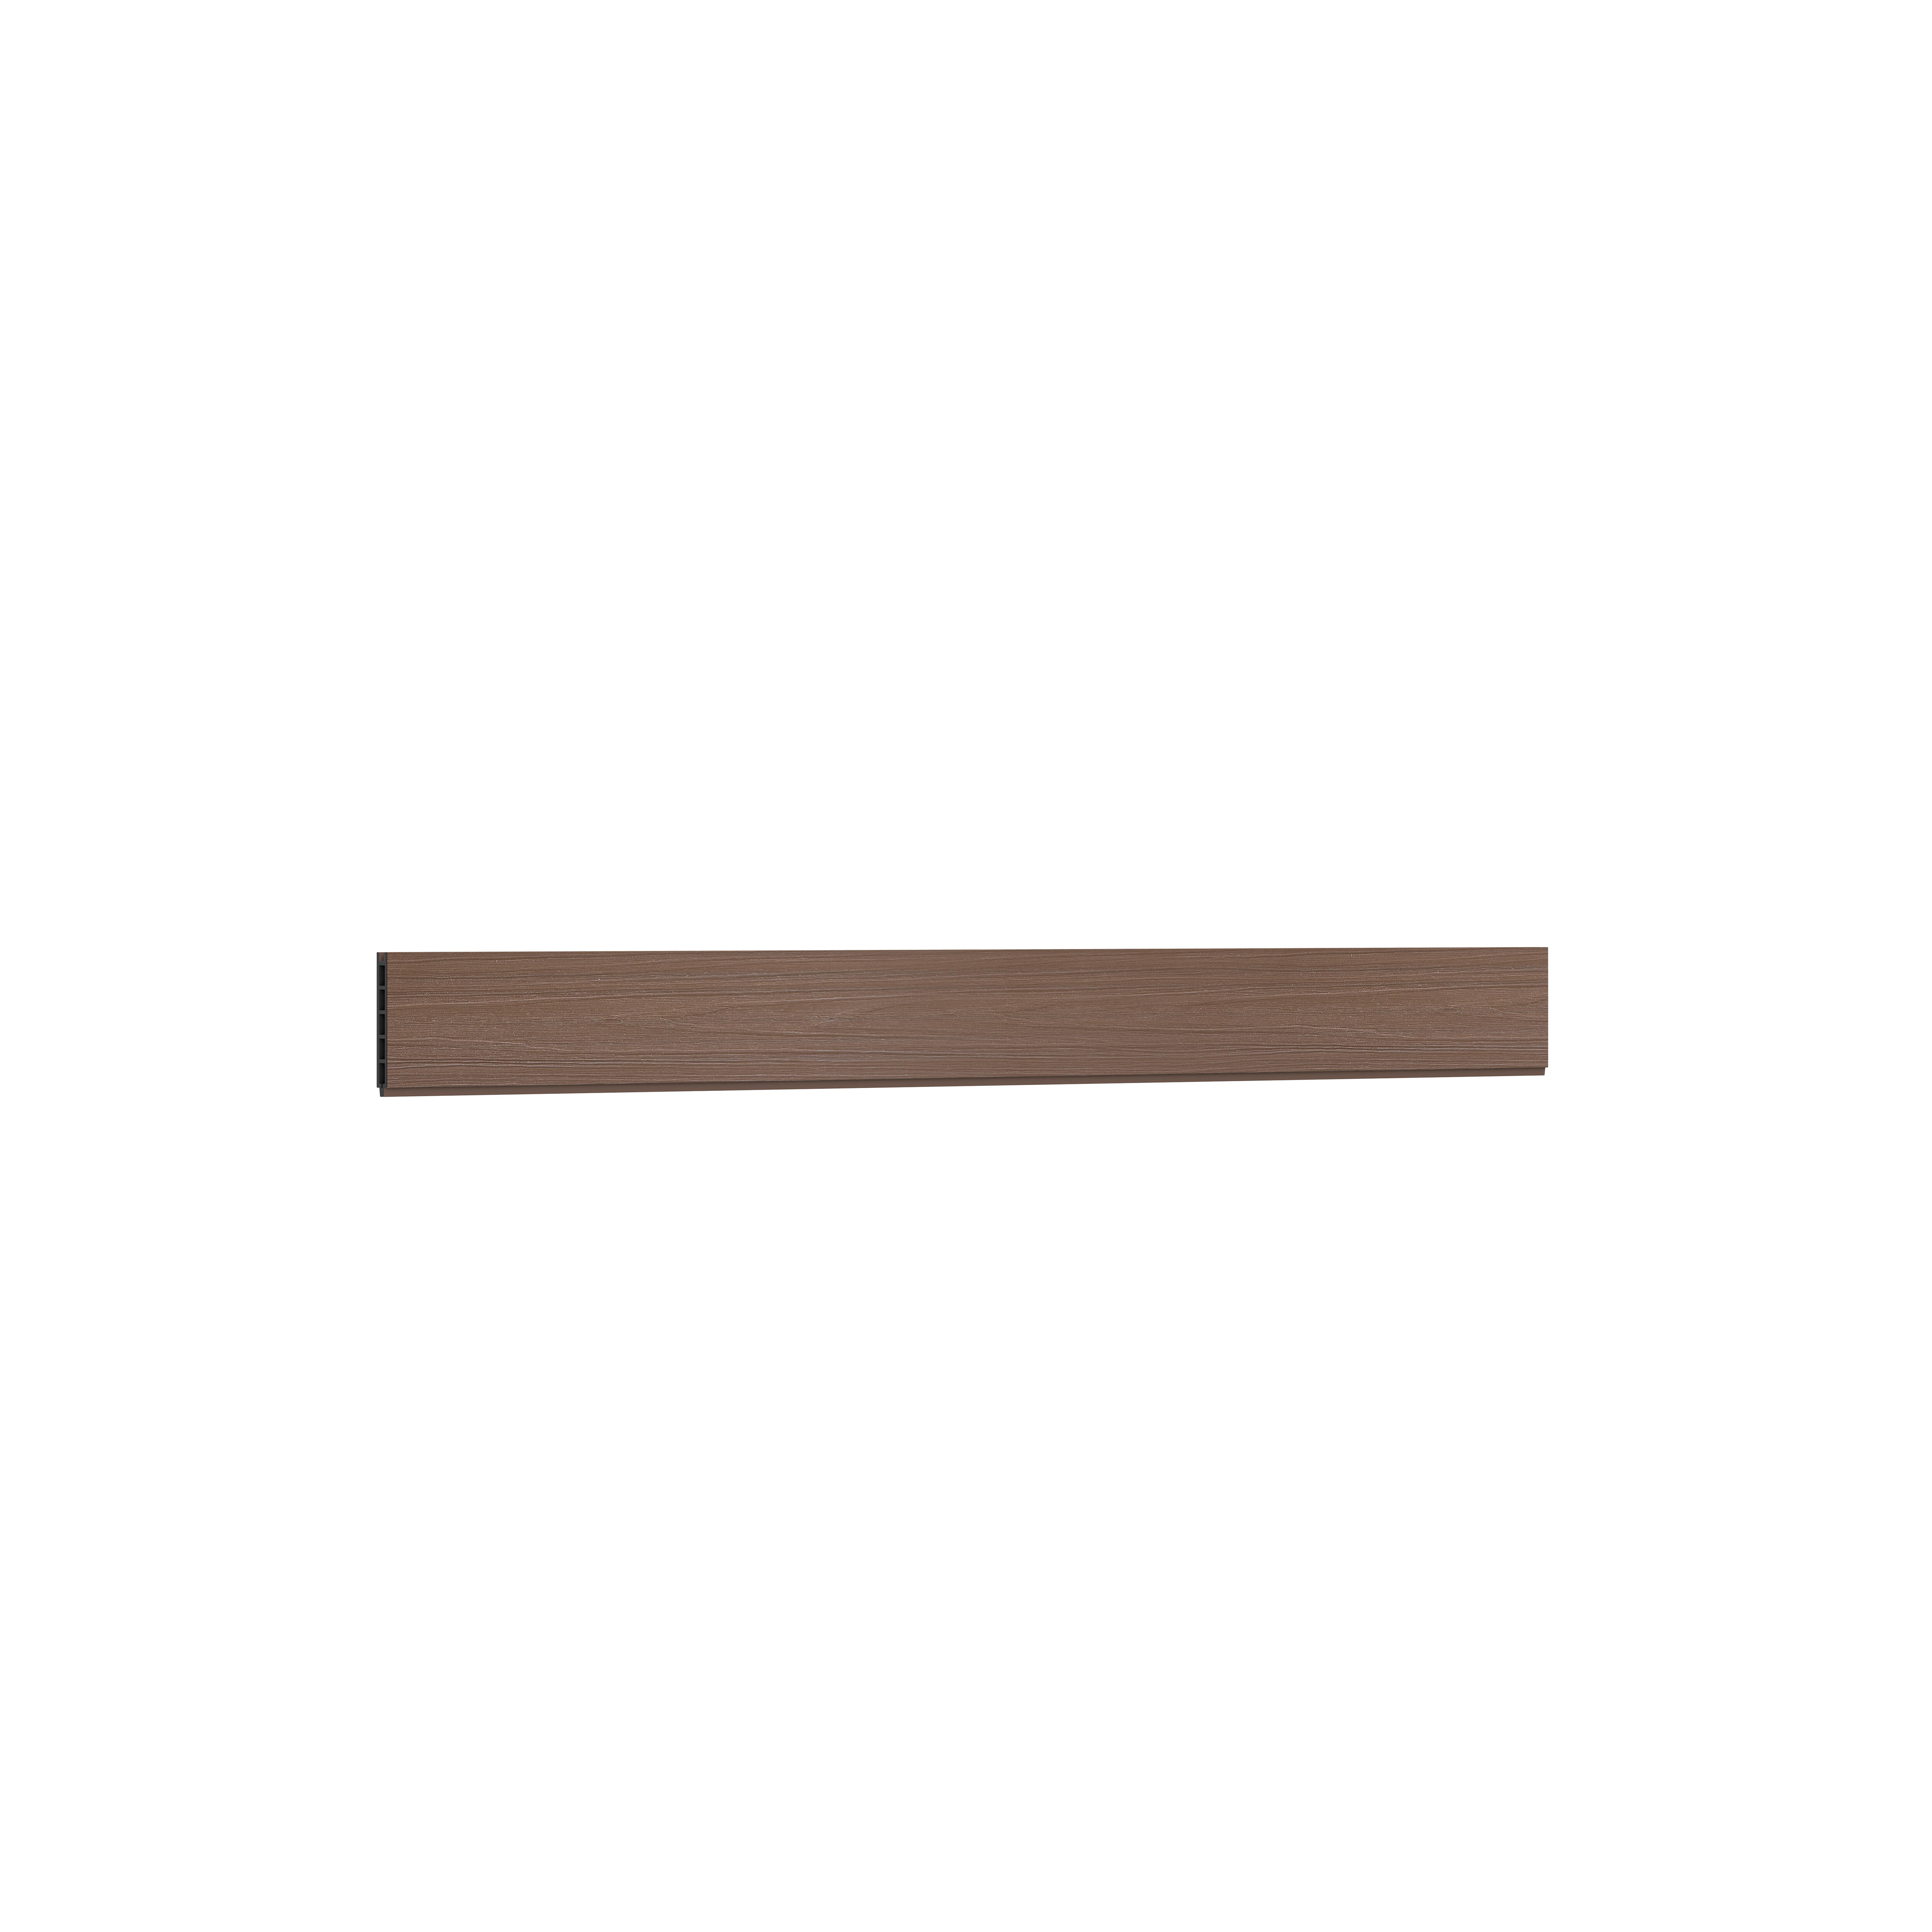 Lama de composite ipe marrón 179x1,5x1,2 cm (pack 6 uds)